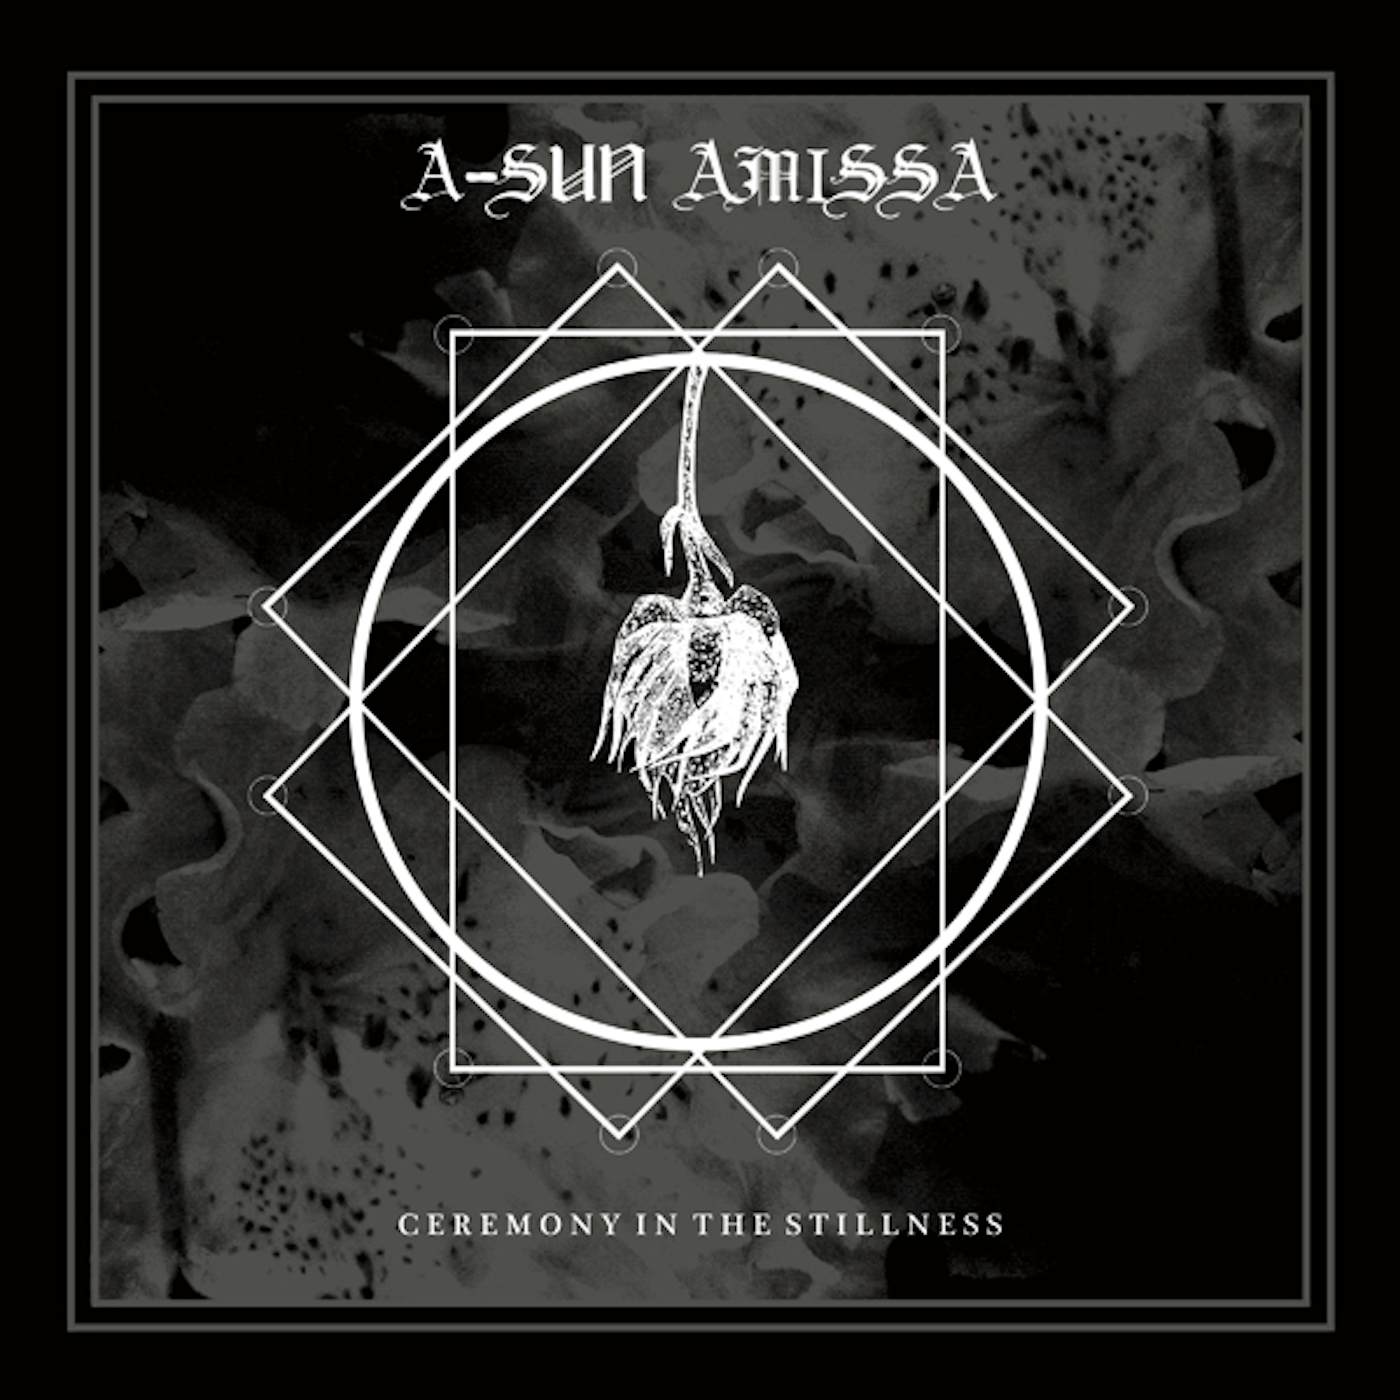 A-Sun Amissa CEREMONY IN THE STILLNESS CD